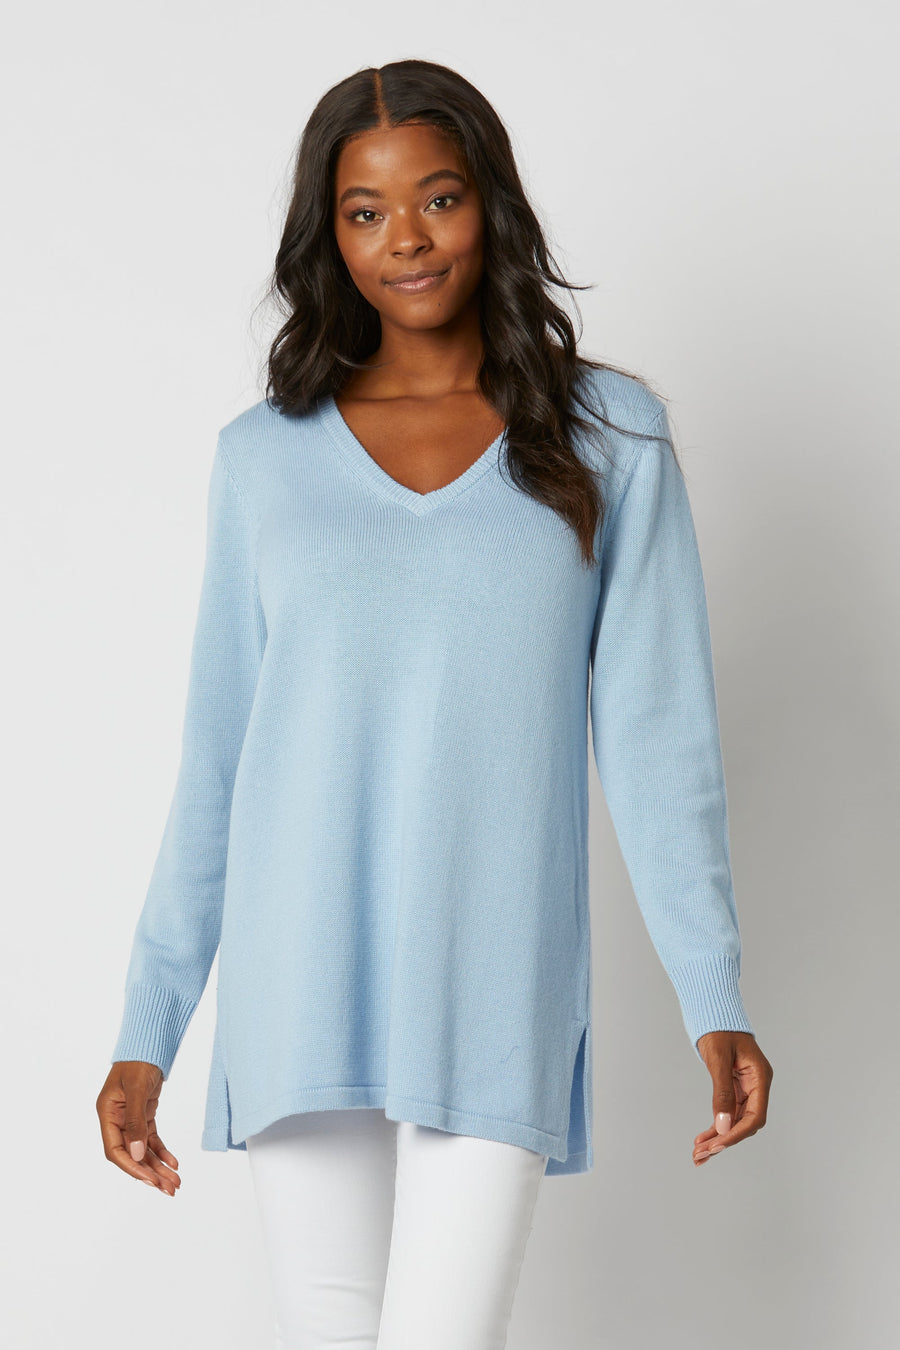 Placid Blue V Neck Tunic Sweater